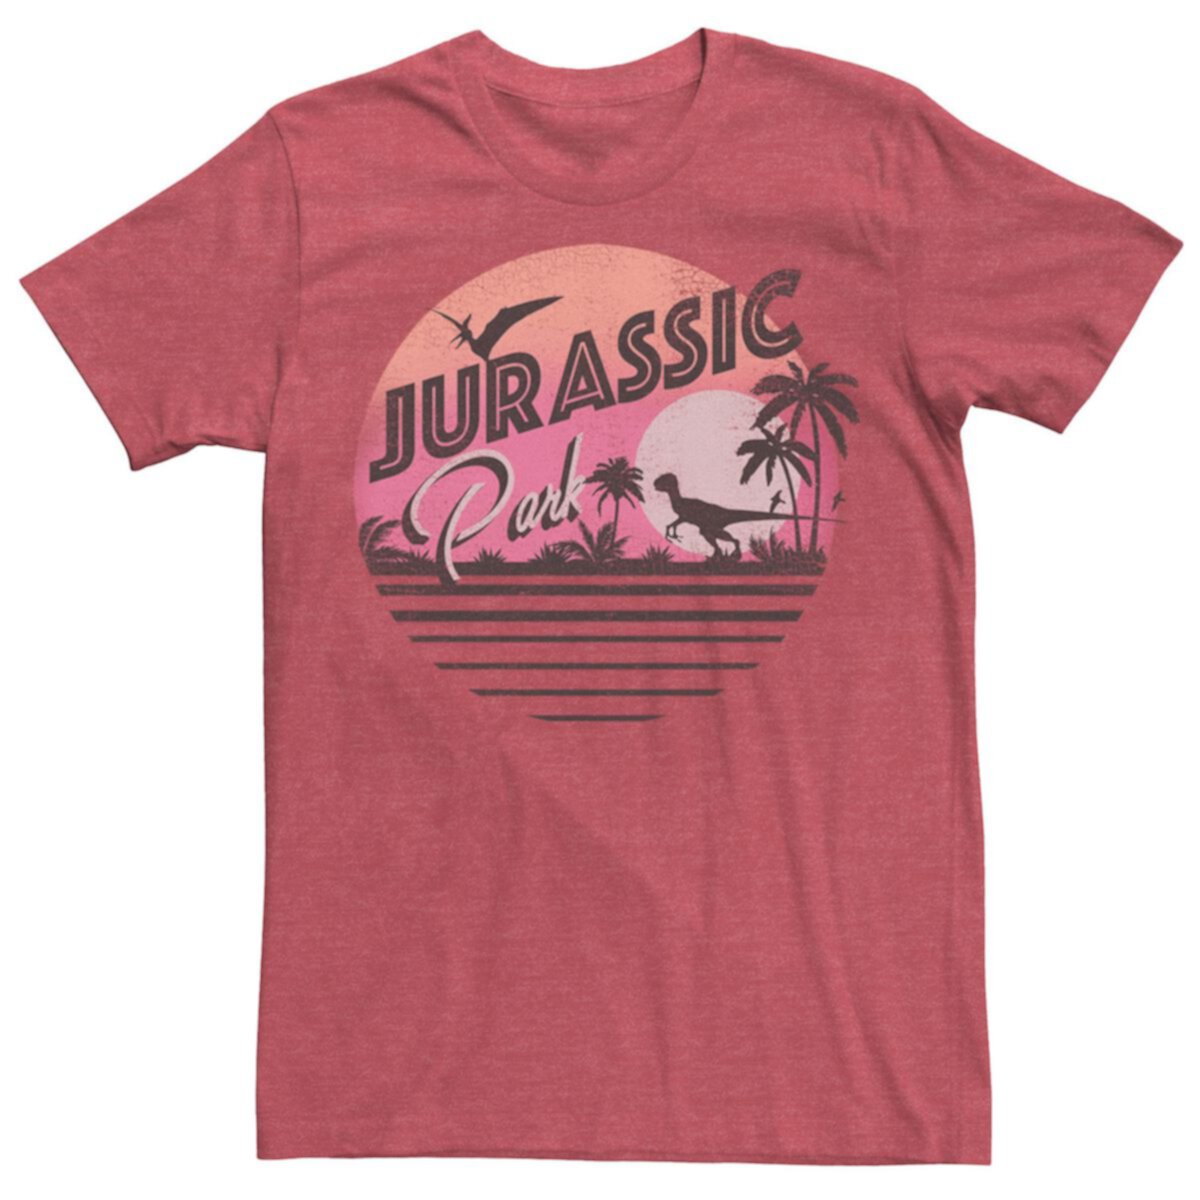 Мужская розовая футболка Jurassic Park с градиентом Sunset Get Wild Jurassic Park